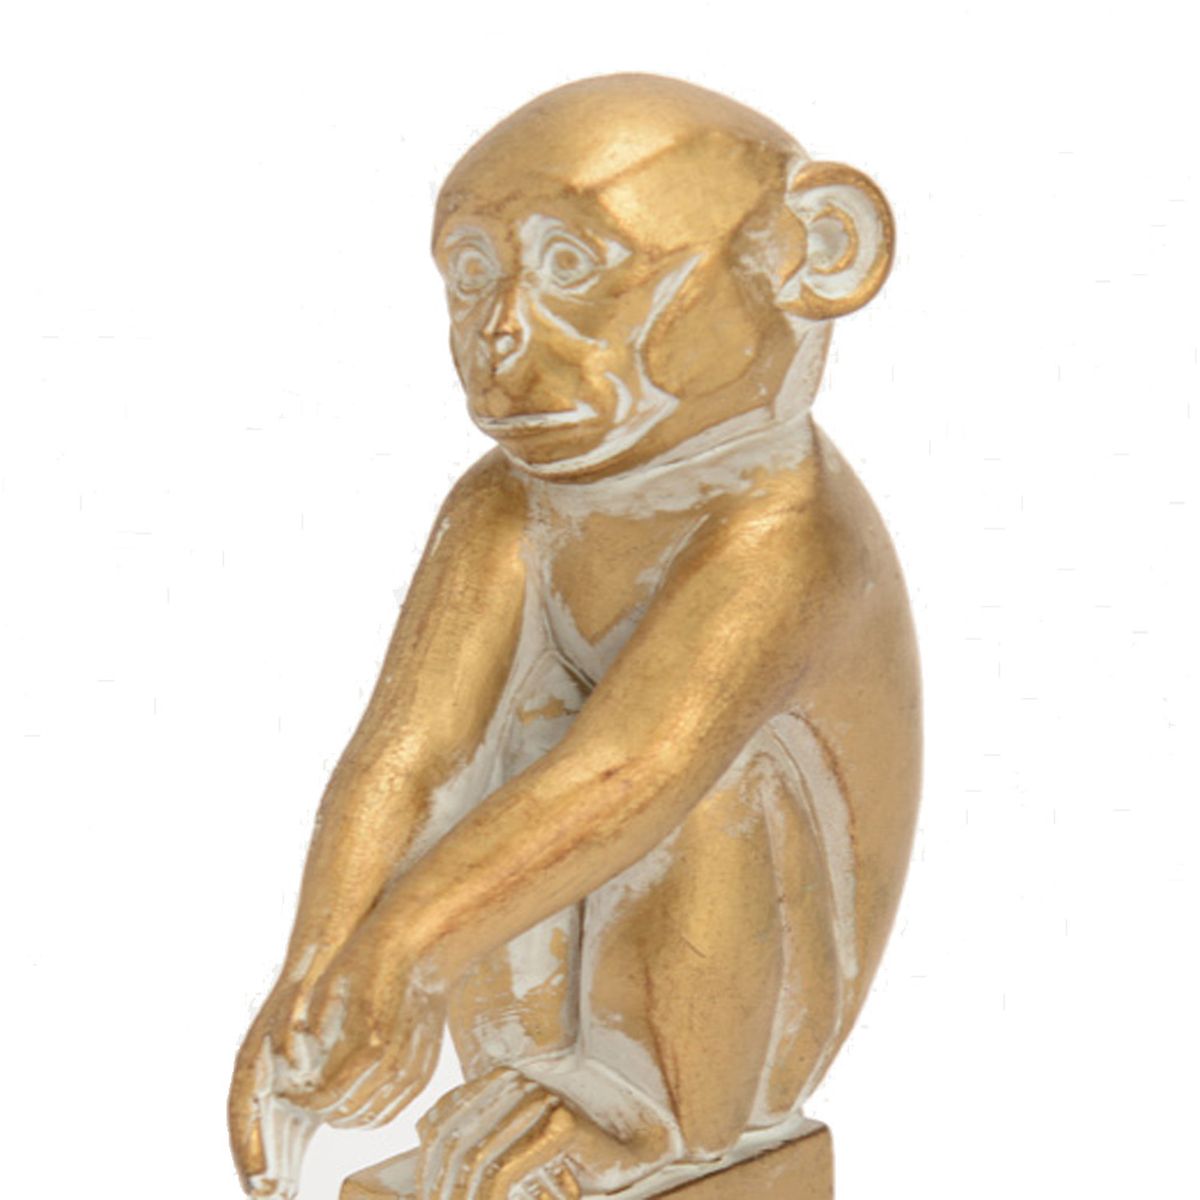 Monkey in gold resin